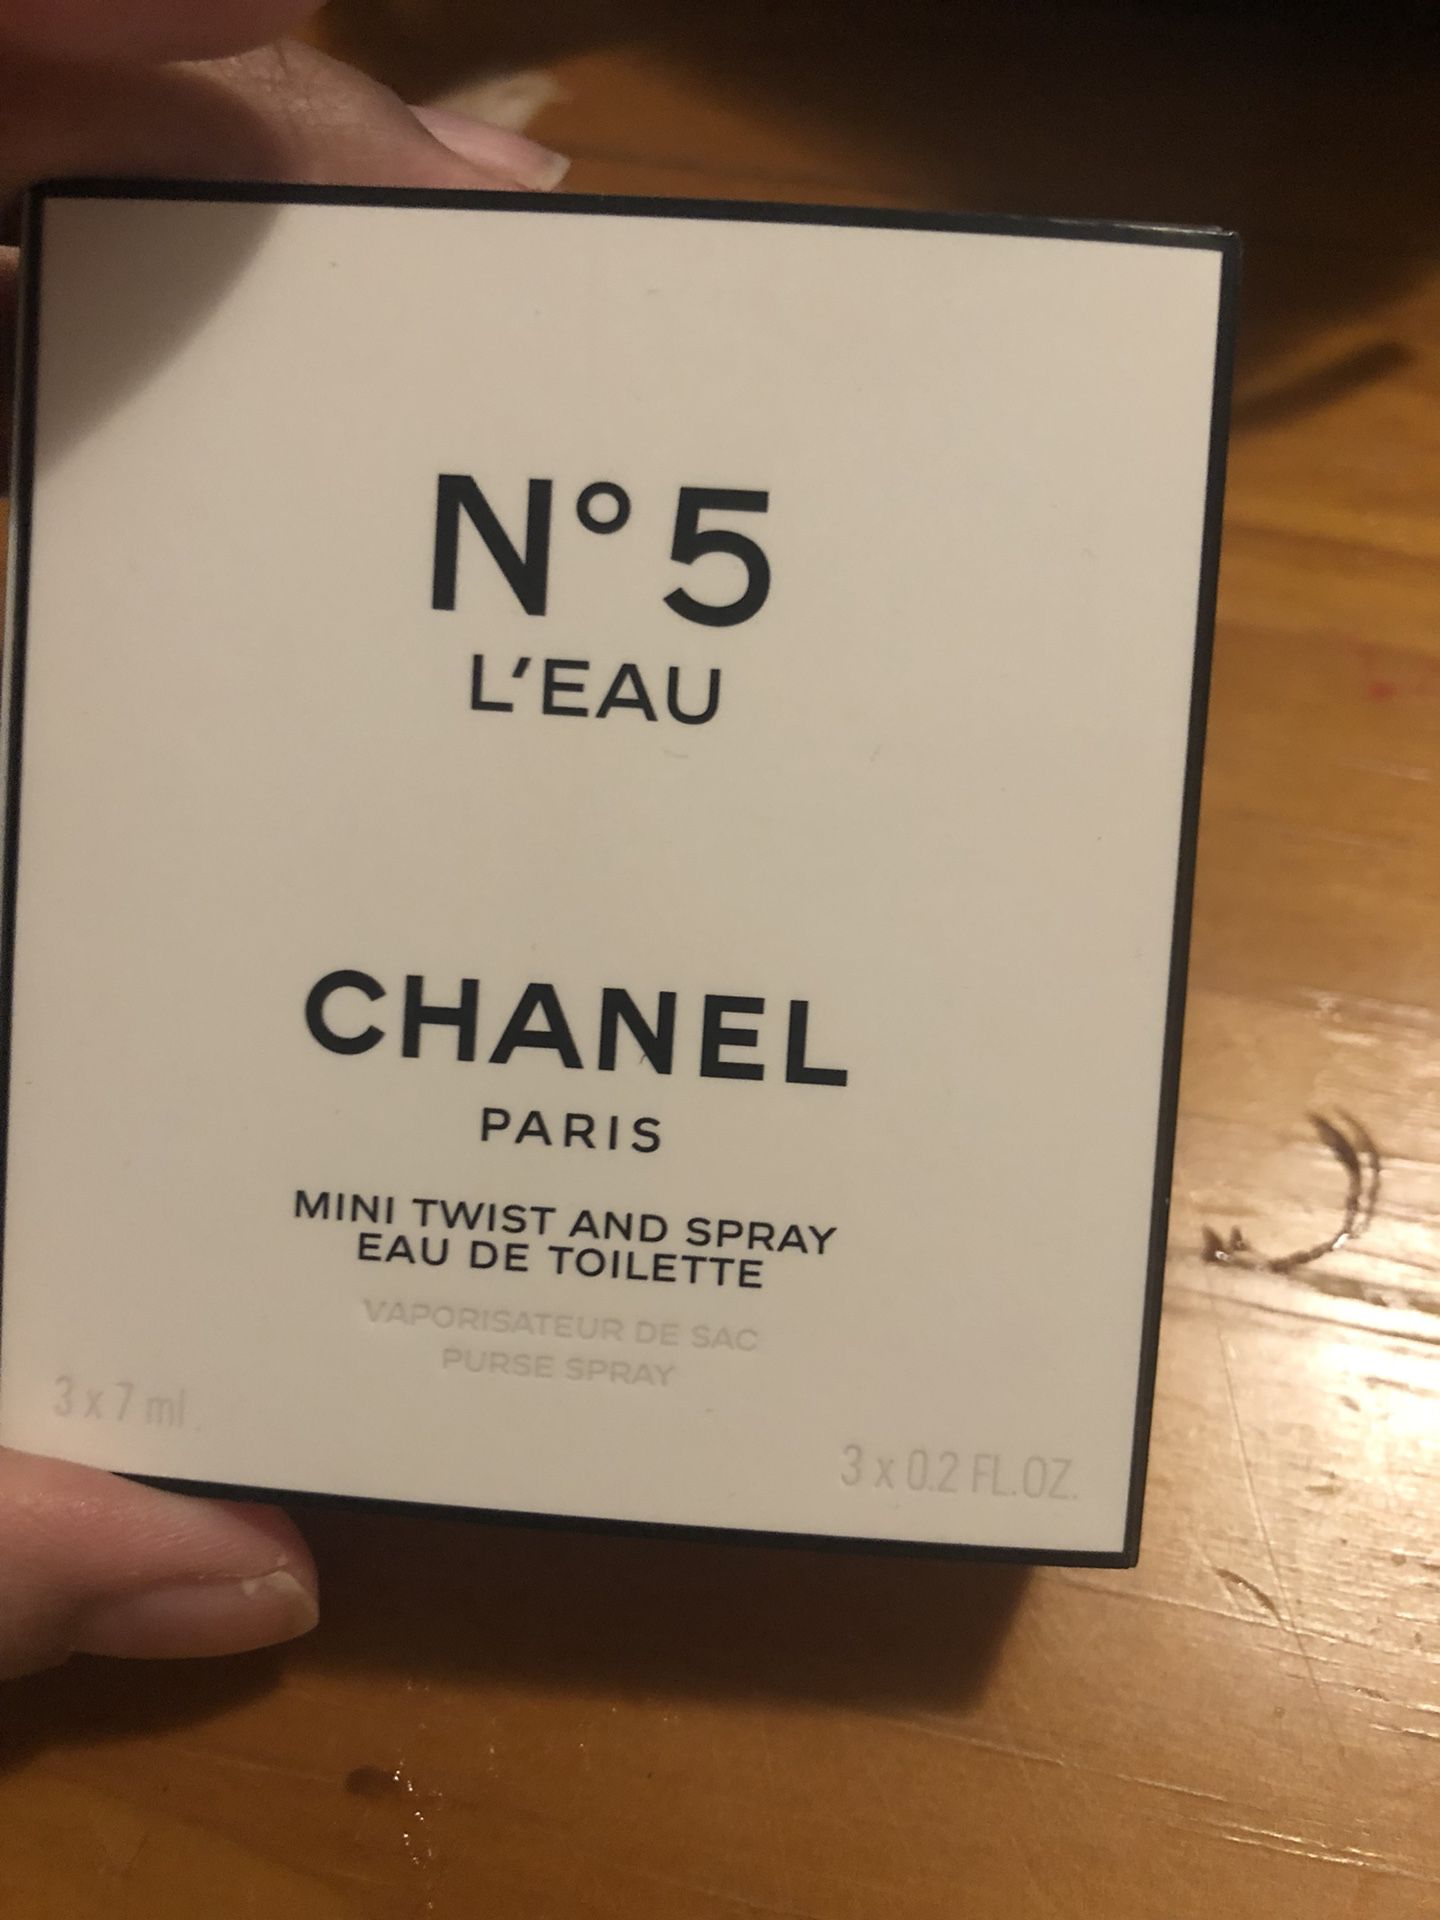 Chanel travel perfume